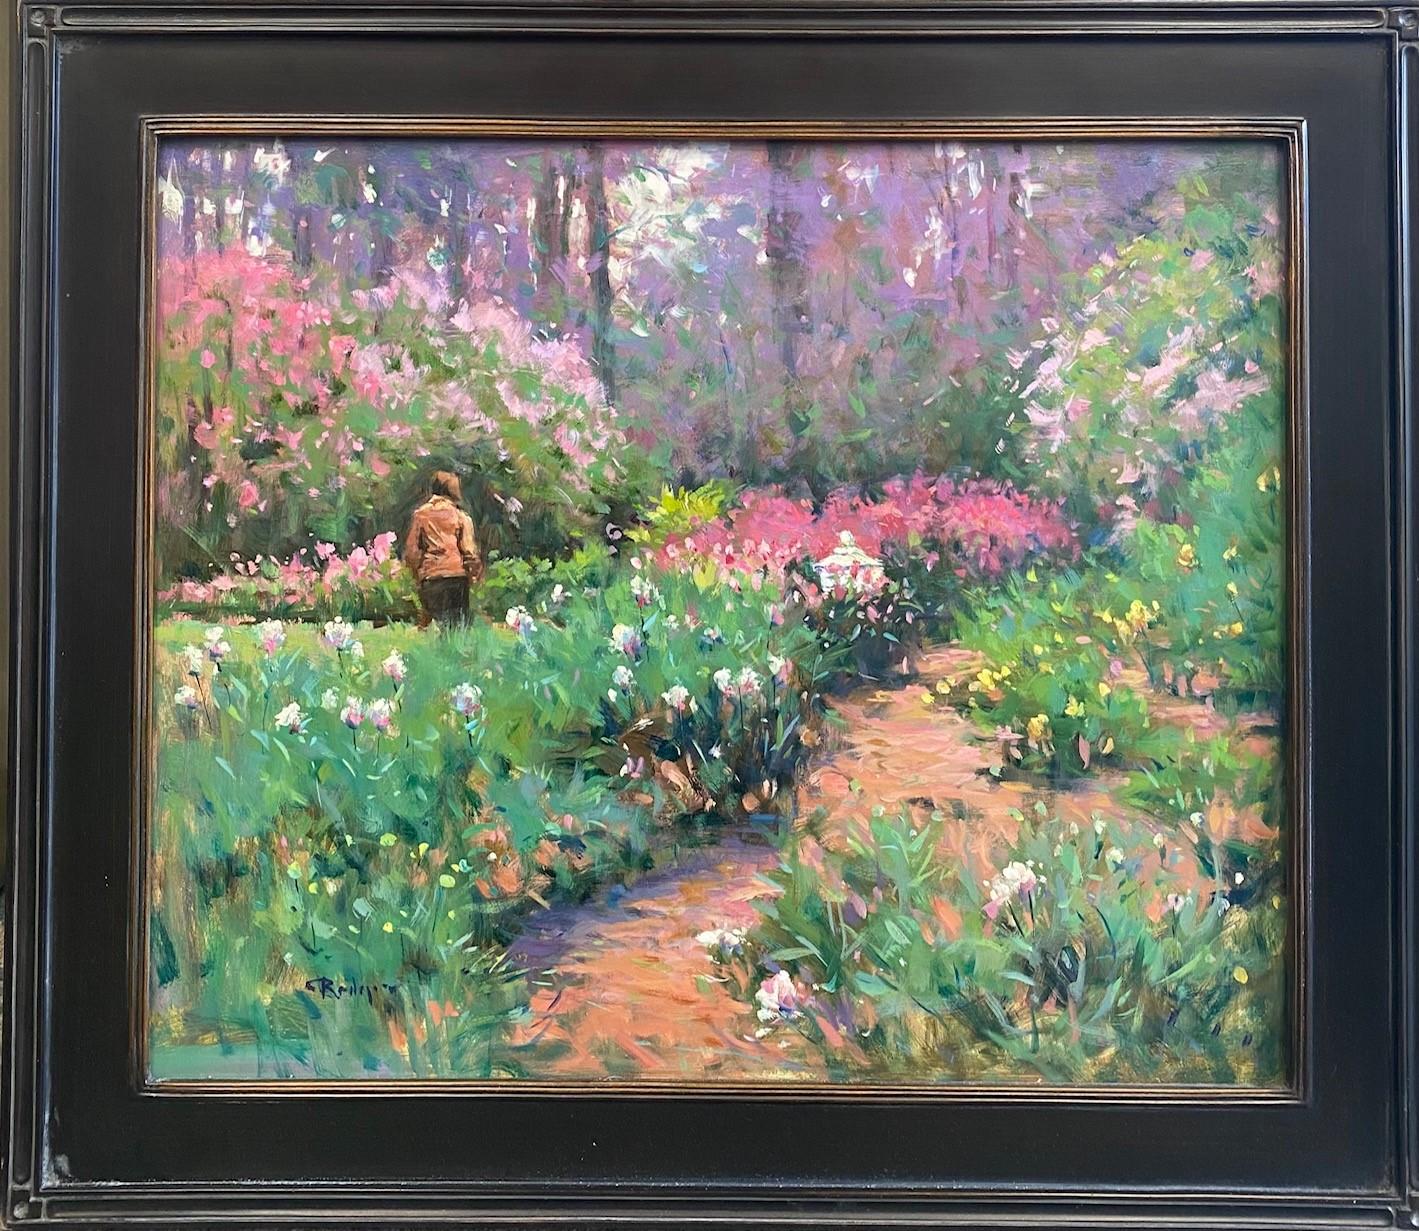 Jim Rodgers Landscape Painting - Forest at Winterthur Garden, original 20x24 impressionist floral landscape